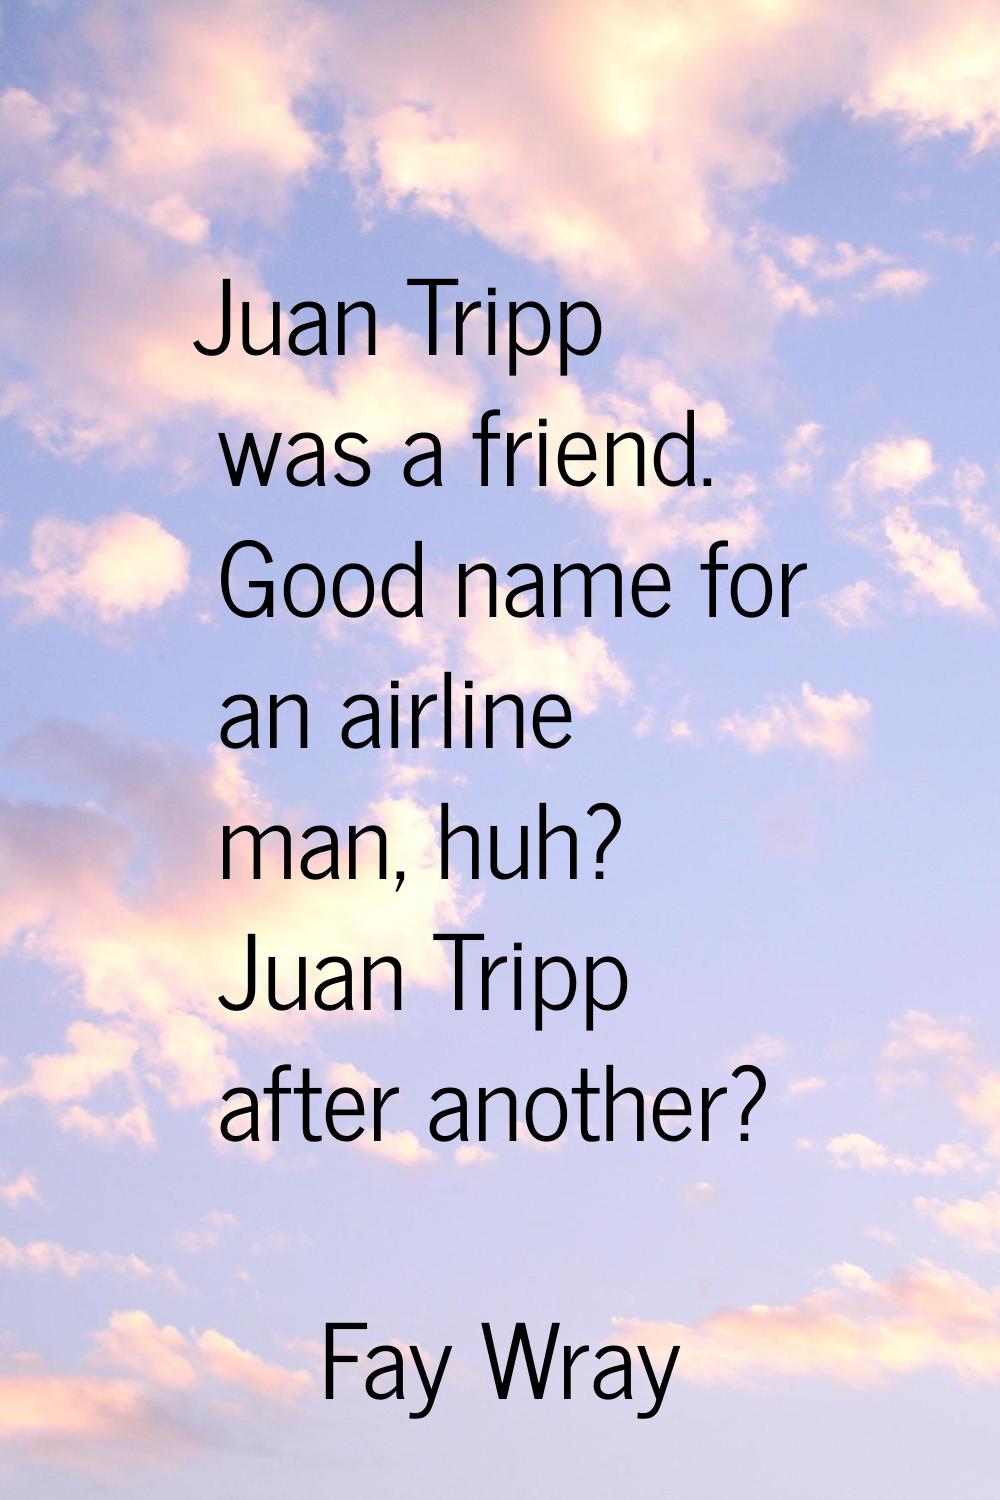 Juan Tripp was a friend. Good name for an airline man, huh? Juan Tripp after another?